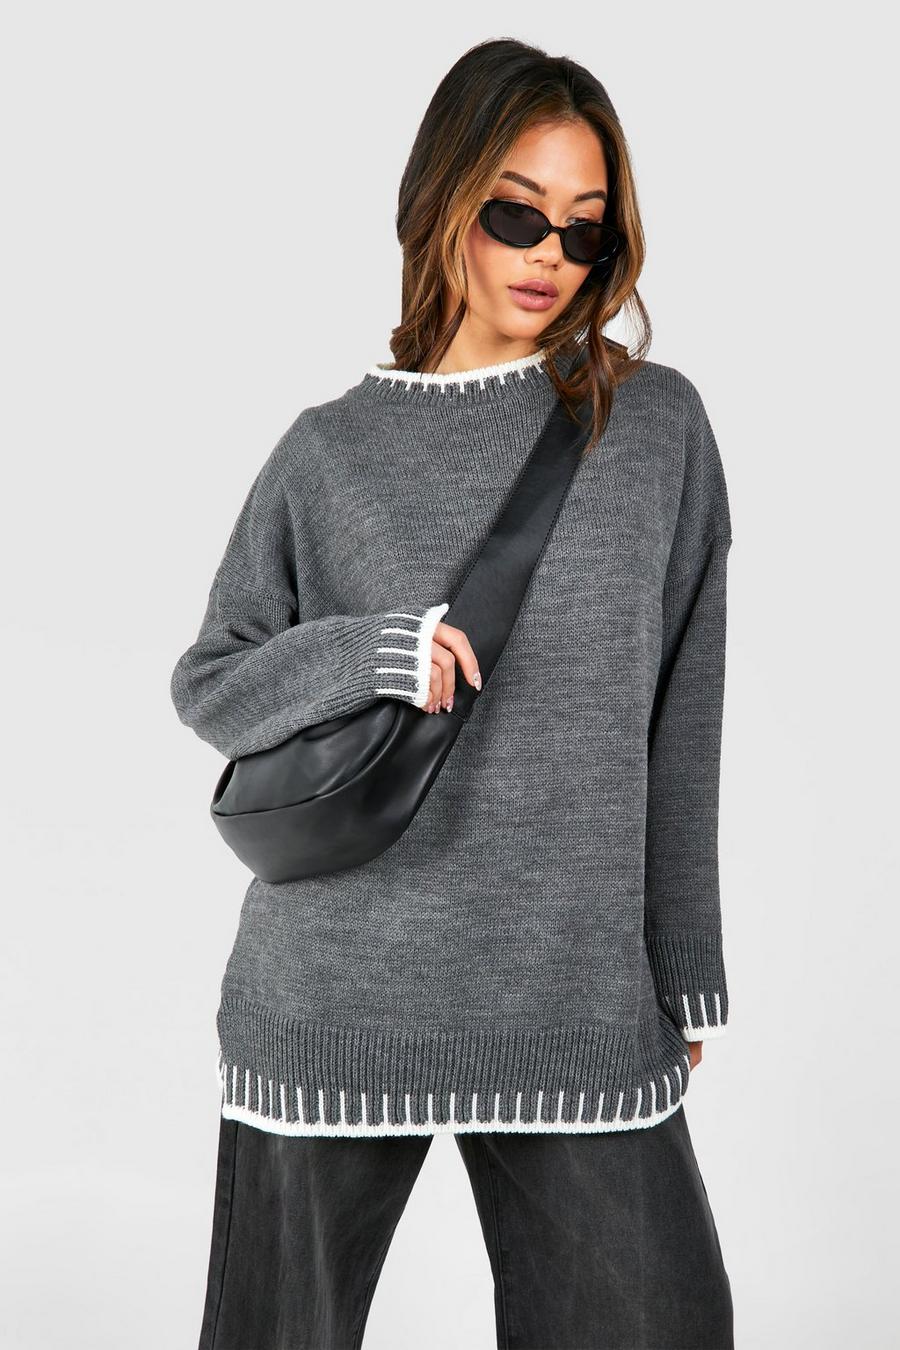 Contrast Stitch Sweater Style 712-05